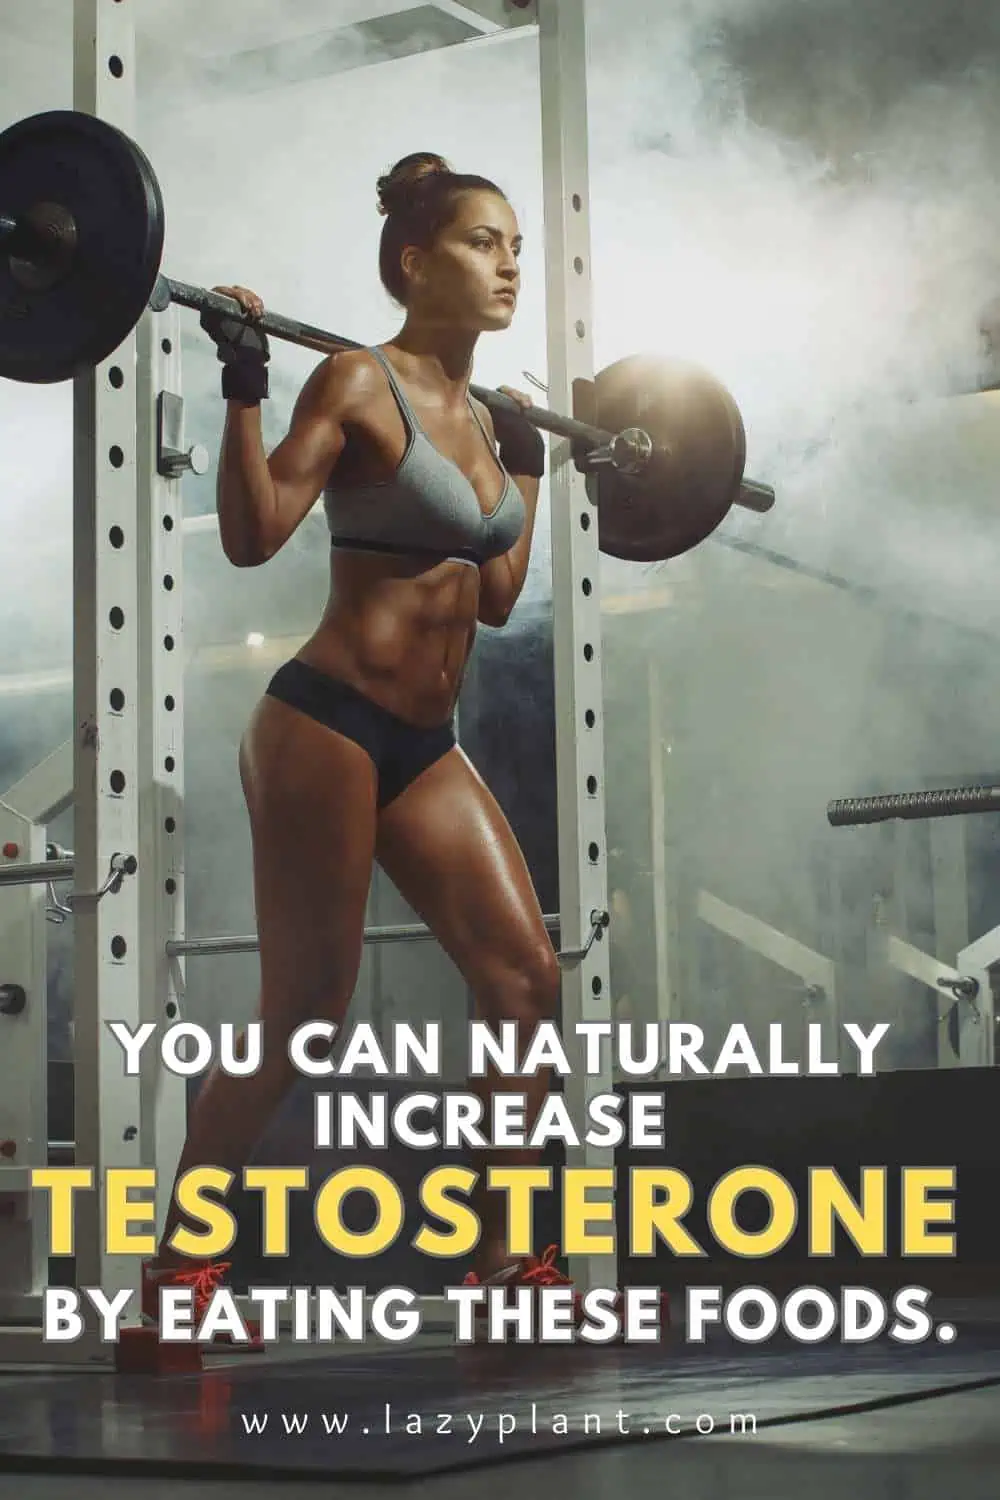 how to naturally increase testosterone through vegan food?